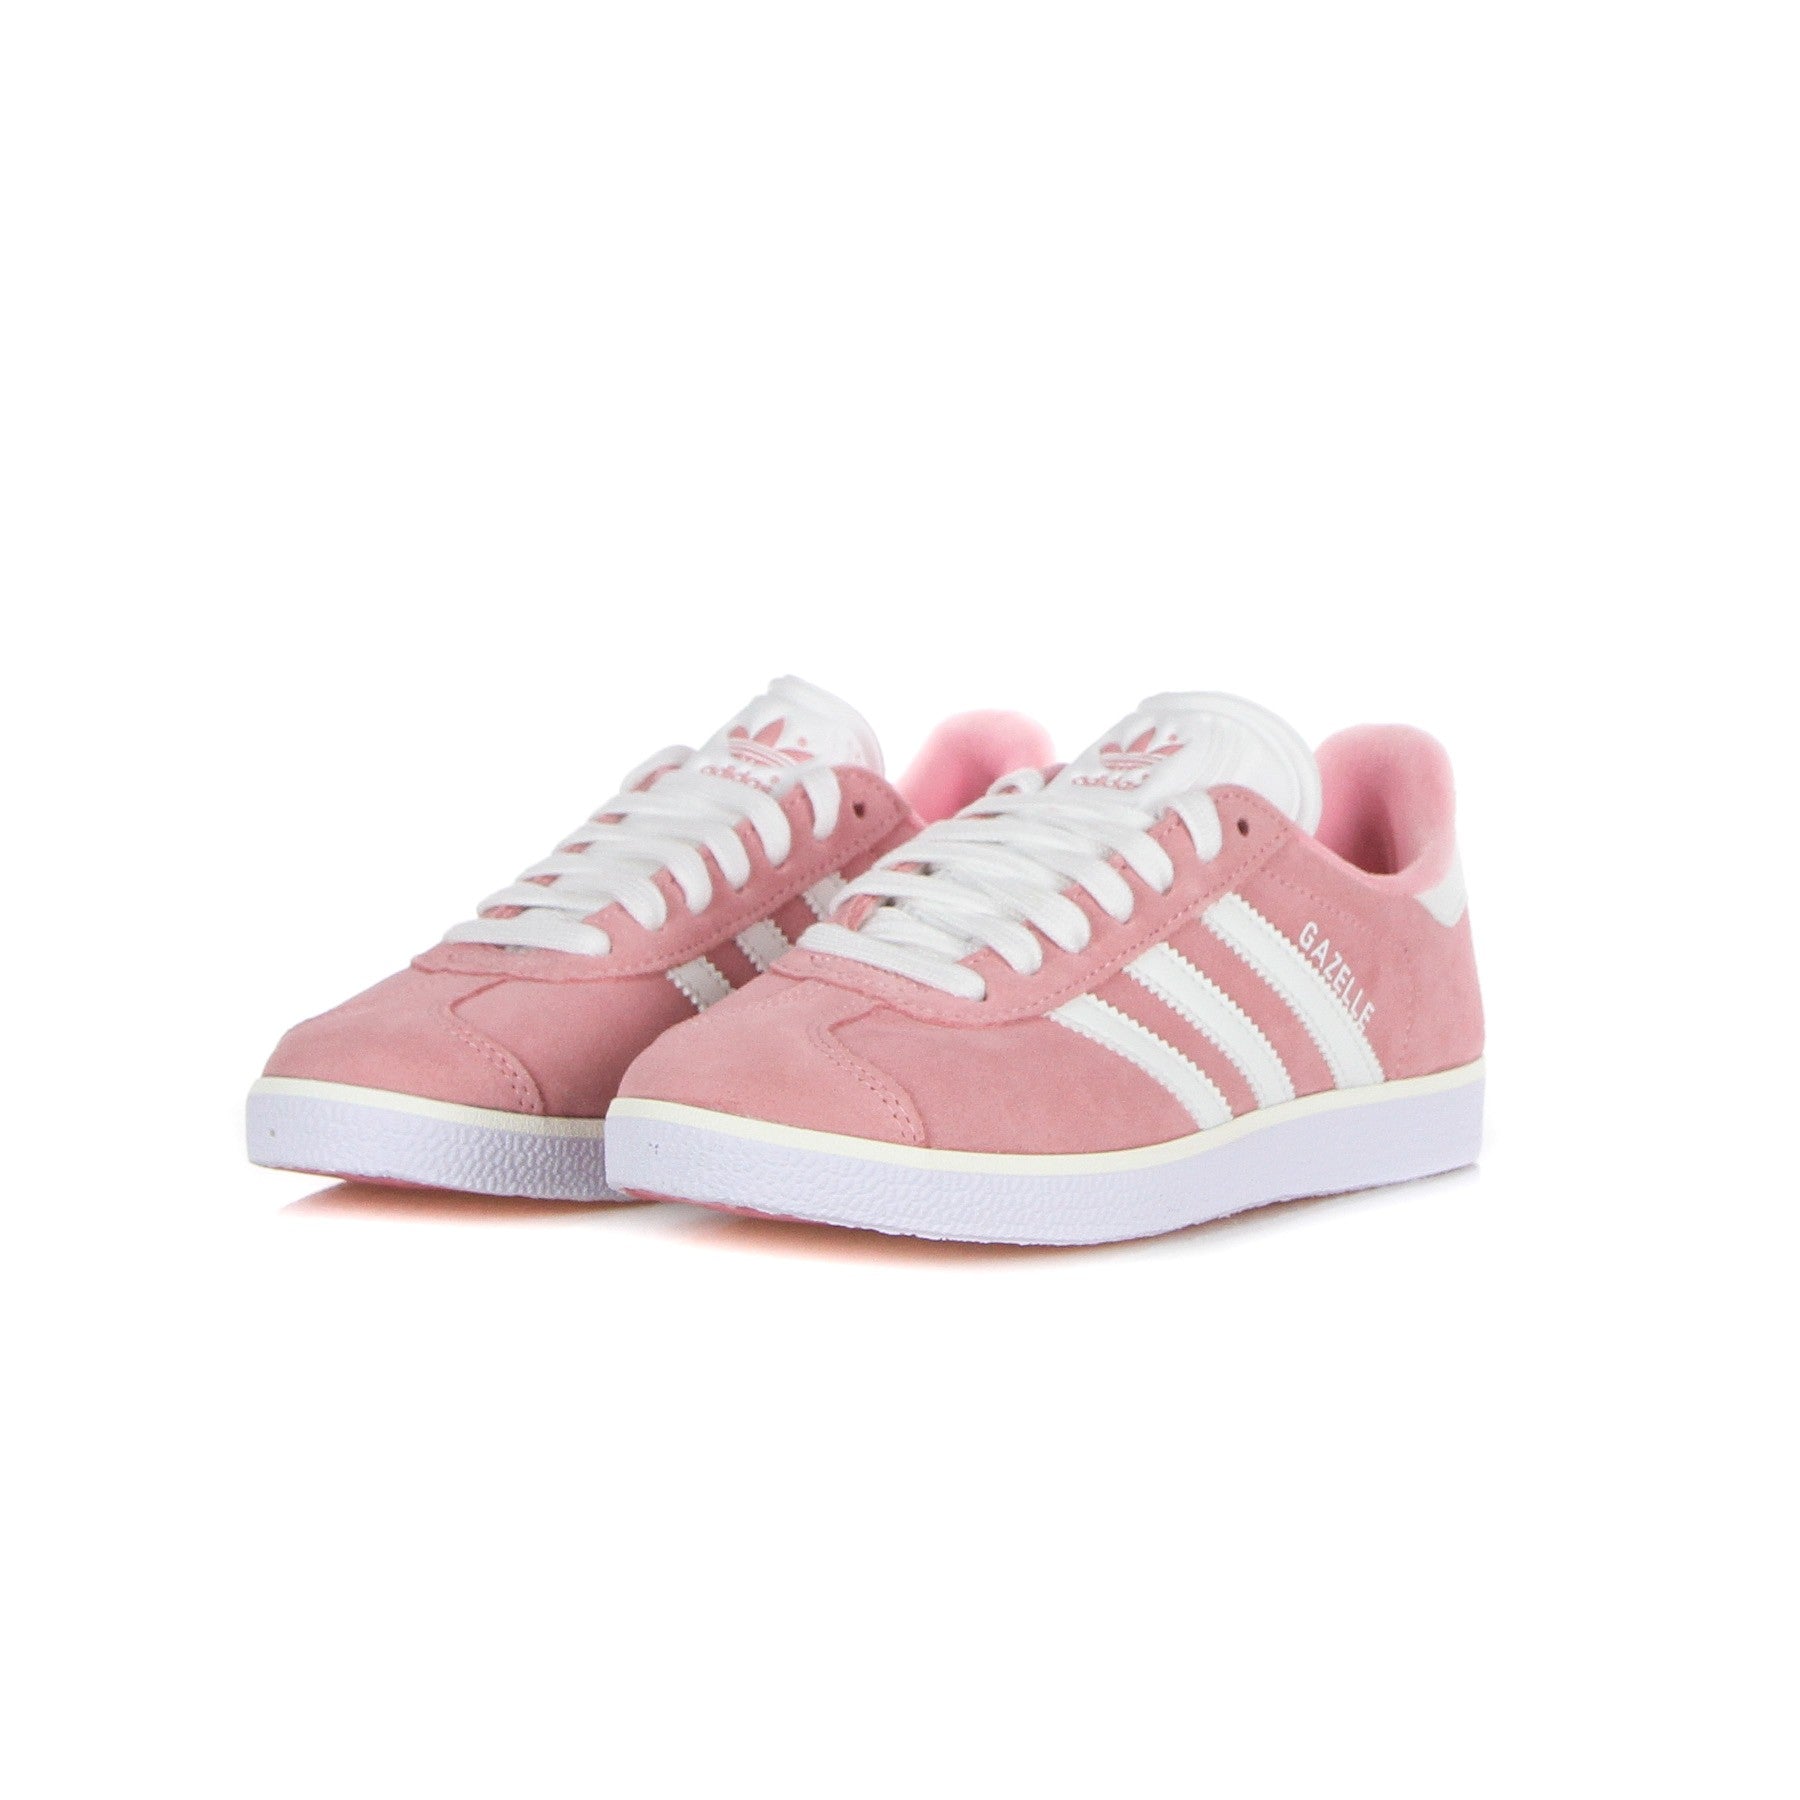 Gazelle W Women's Low Shoe Light Pink/core White/silver Metallic